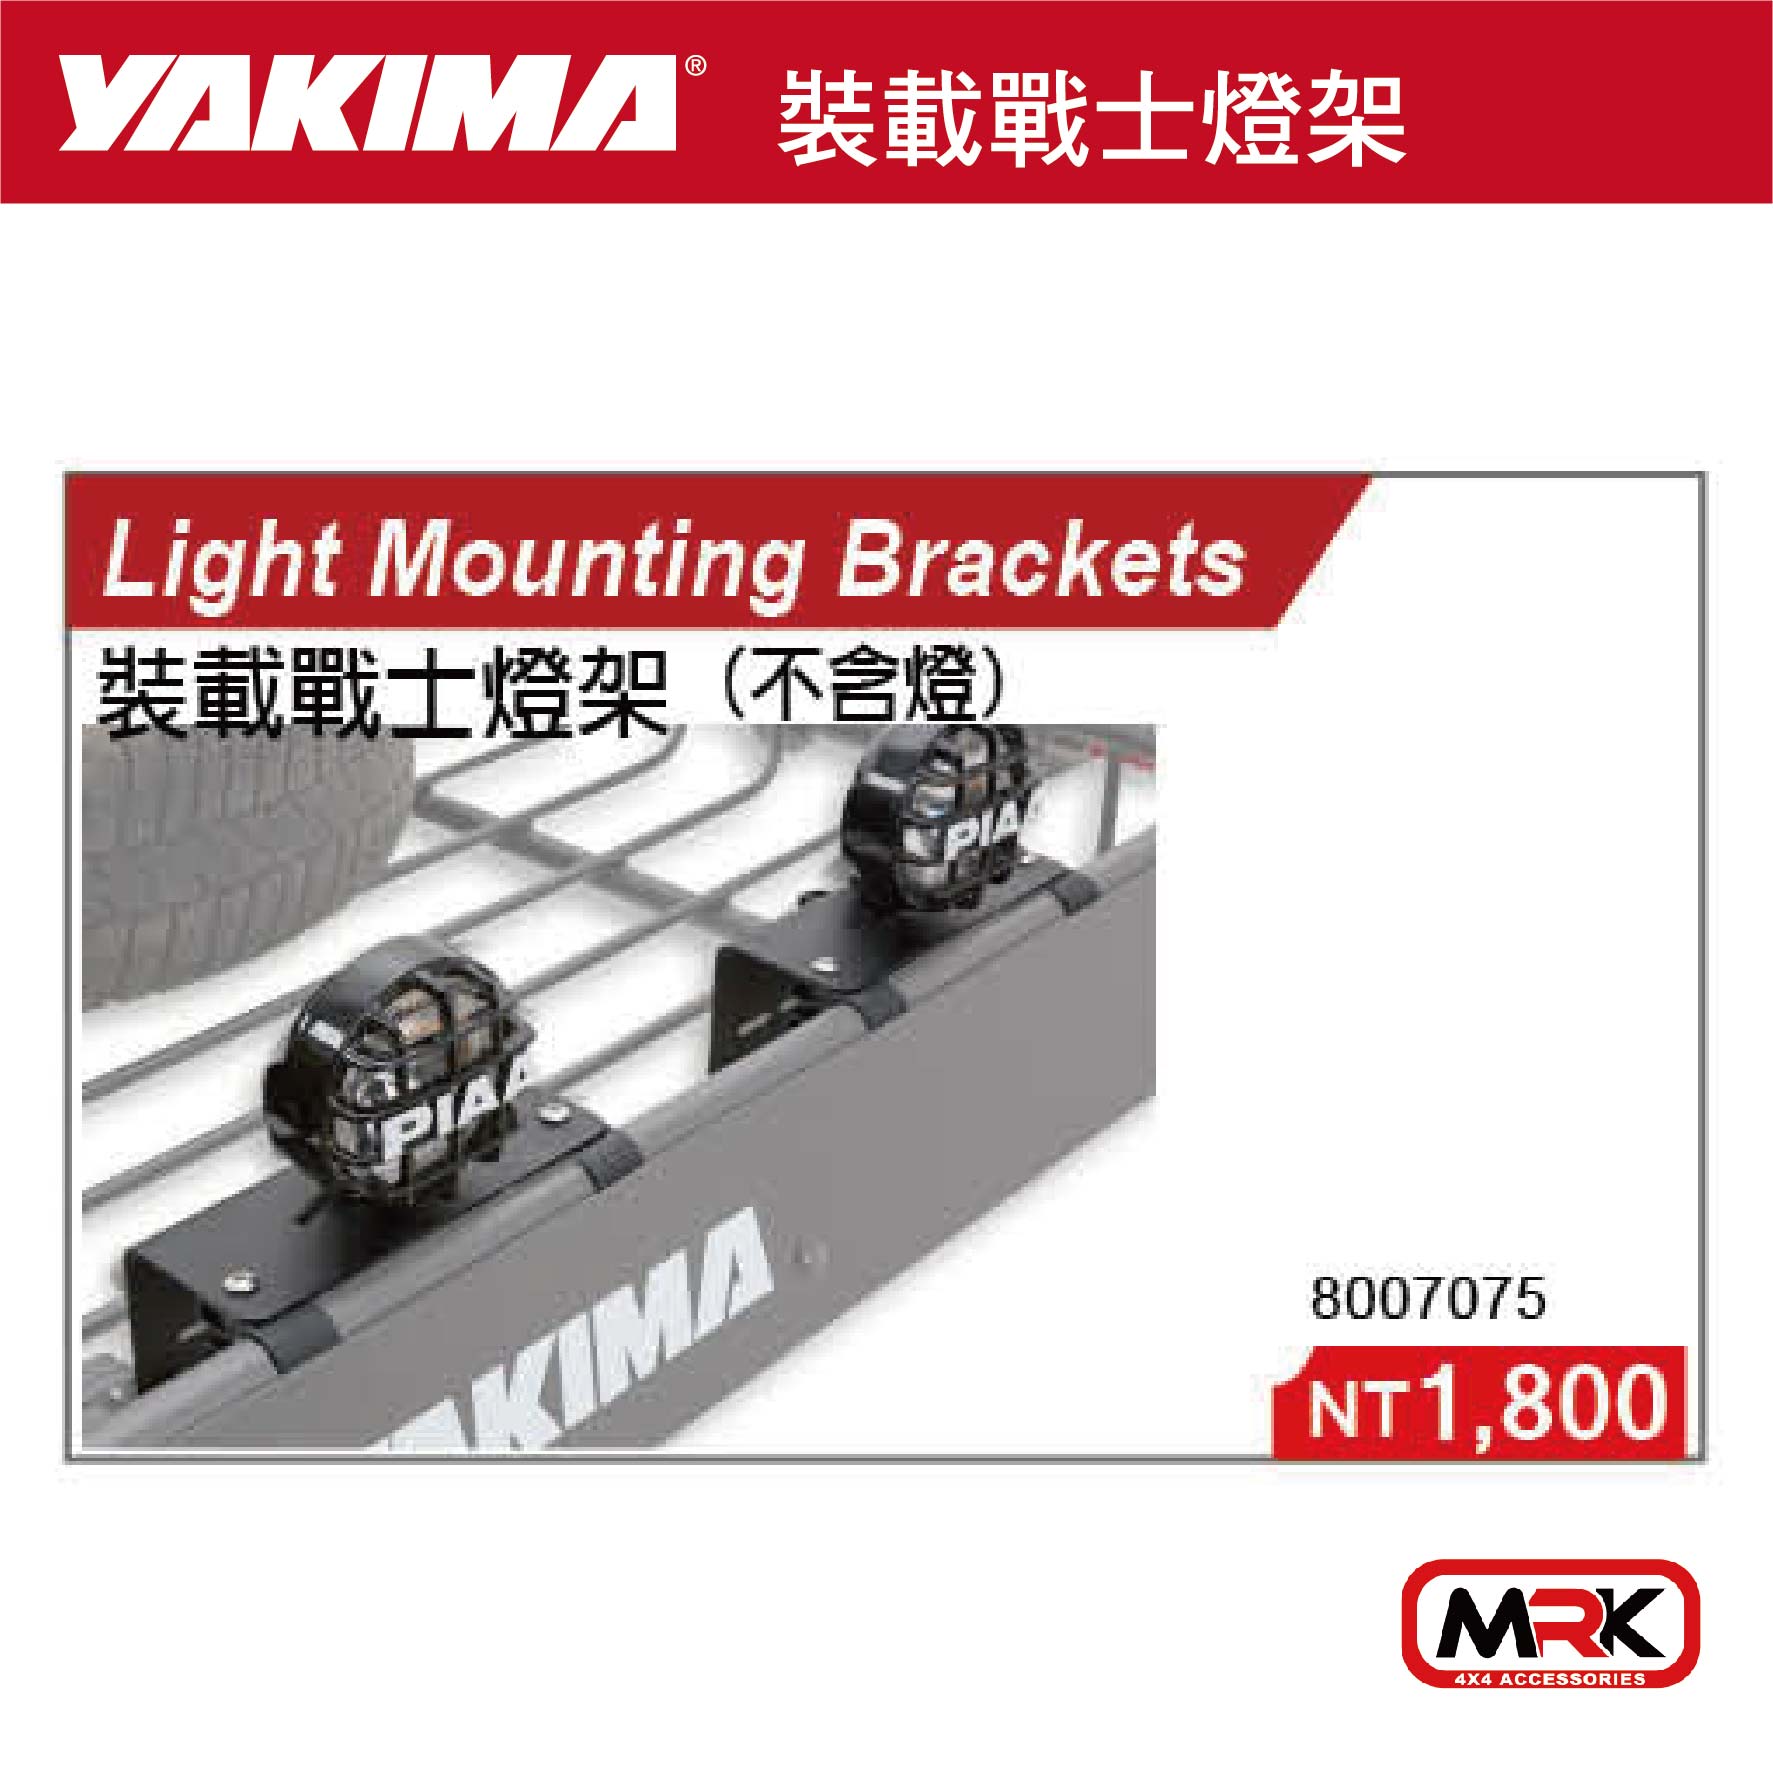 【MRK】YAKIMA 裝載戰士燈架 (不含燈) LIGHT MOUNTING 7075 燈固定架